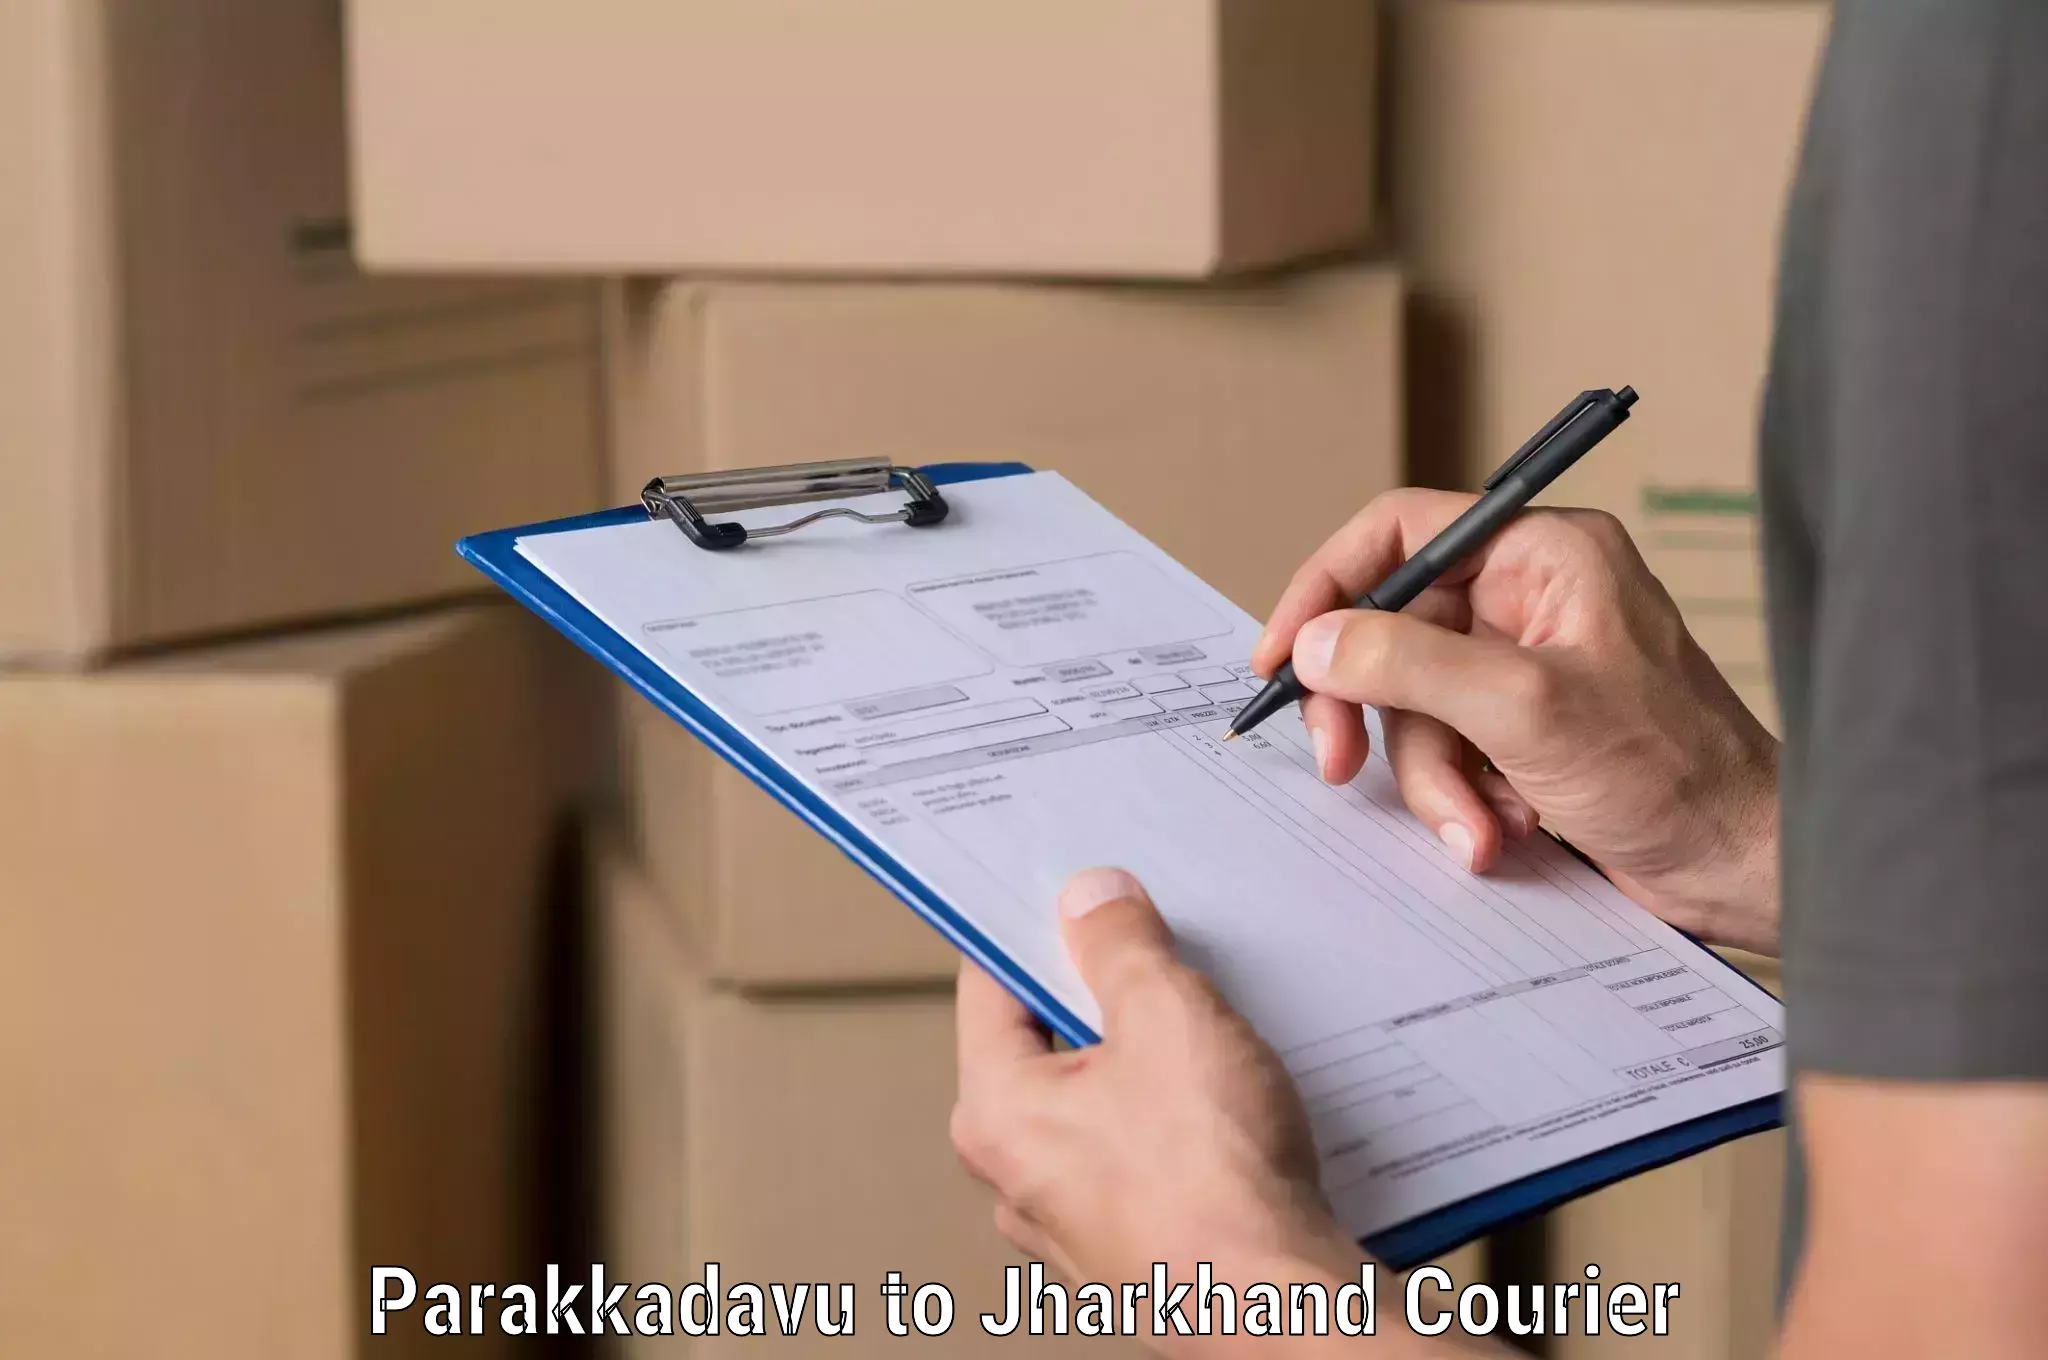 Global shipping networks Parakkadavu to IIIT Ranchi